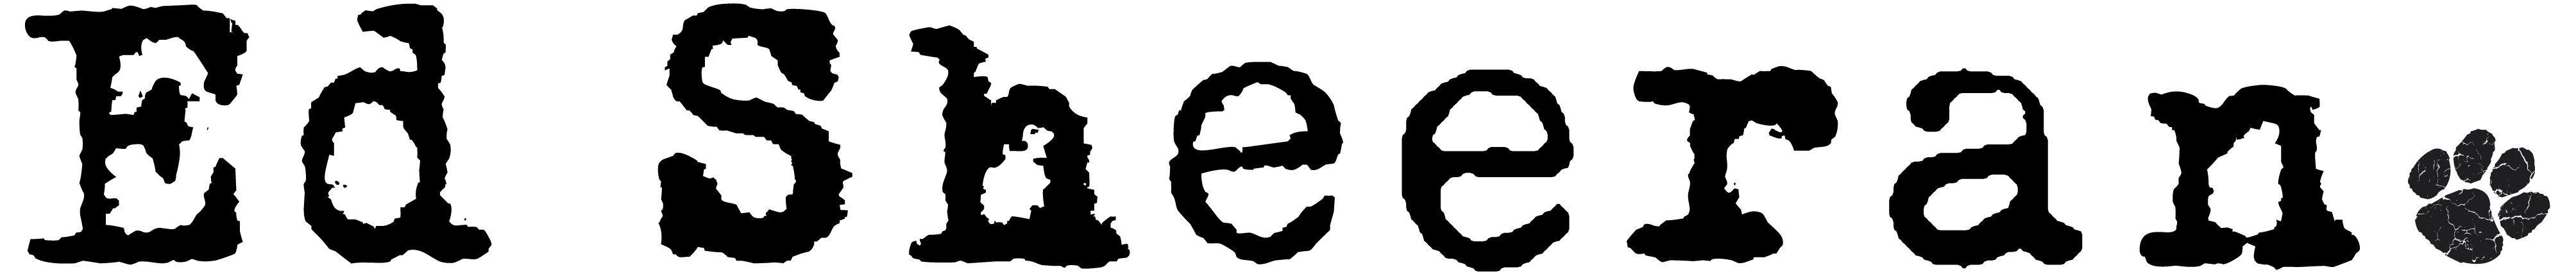 Ed Sheeran Black and White Logo - Ed Sheeran logo. Bullet Journal. Ed Sheeran, Band